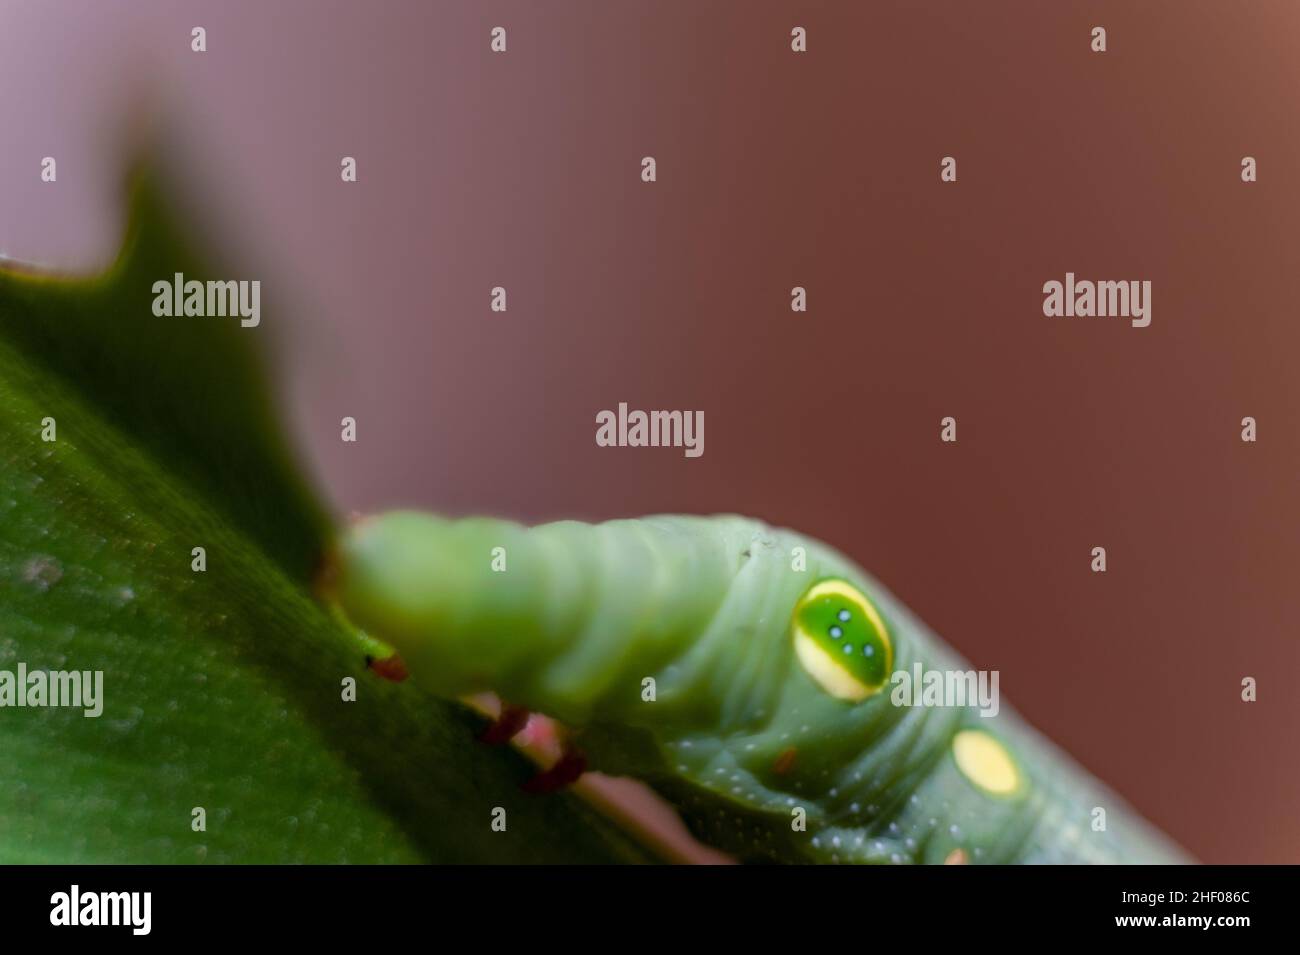 The false eye on the green caterpillar. Stock Photo